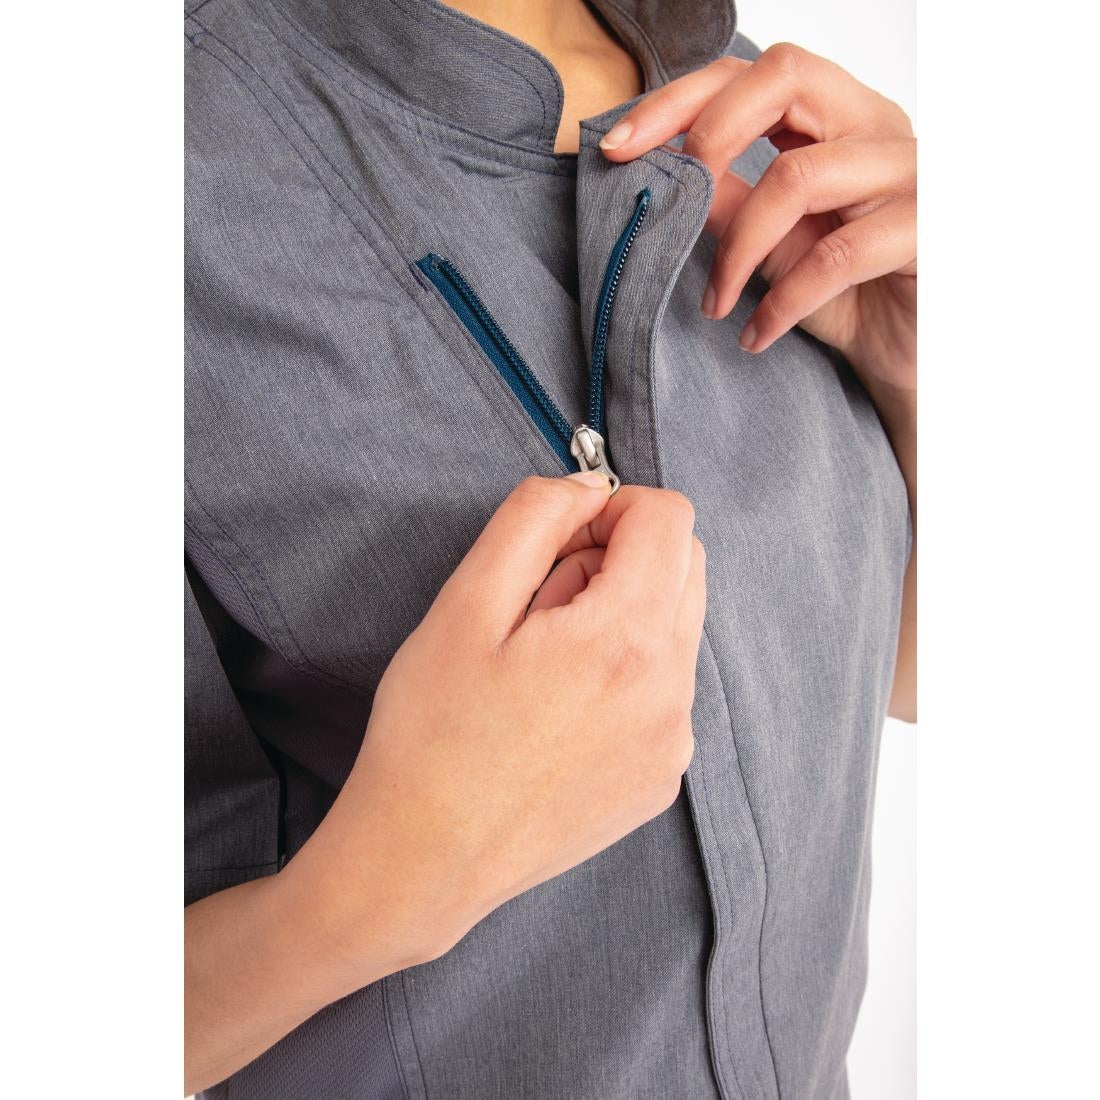 Chef Works Unisex Springfield Lightweight Short Sleeve Zipper Coat Ink Blue JD Catering Equipment Solutions Ltd